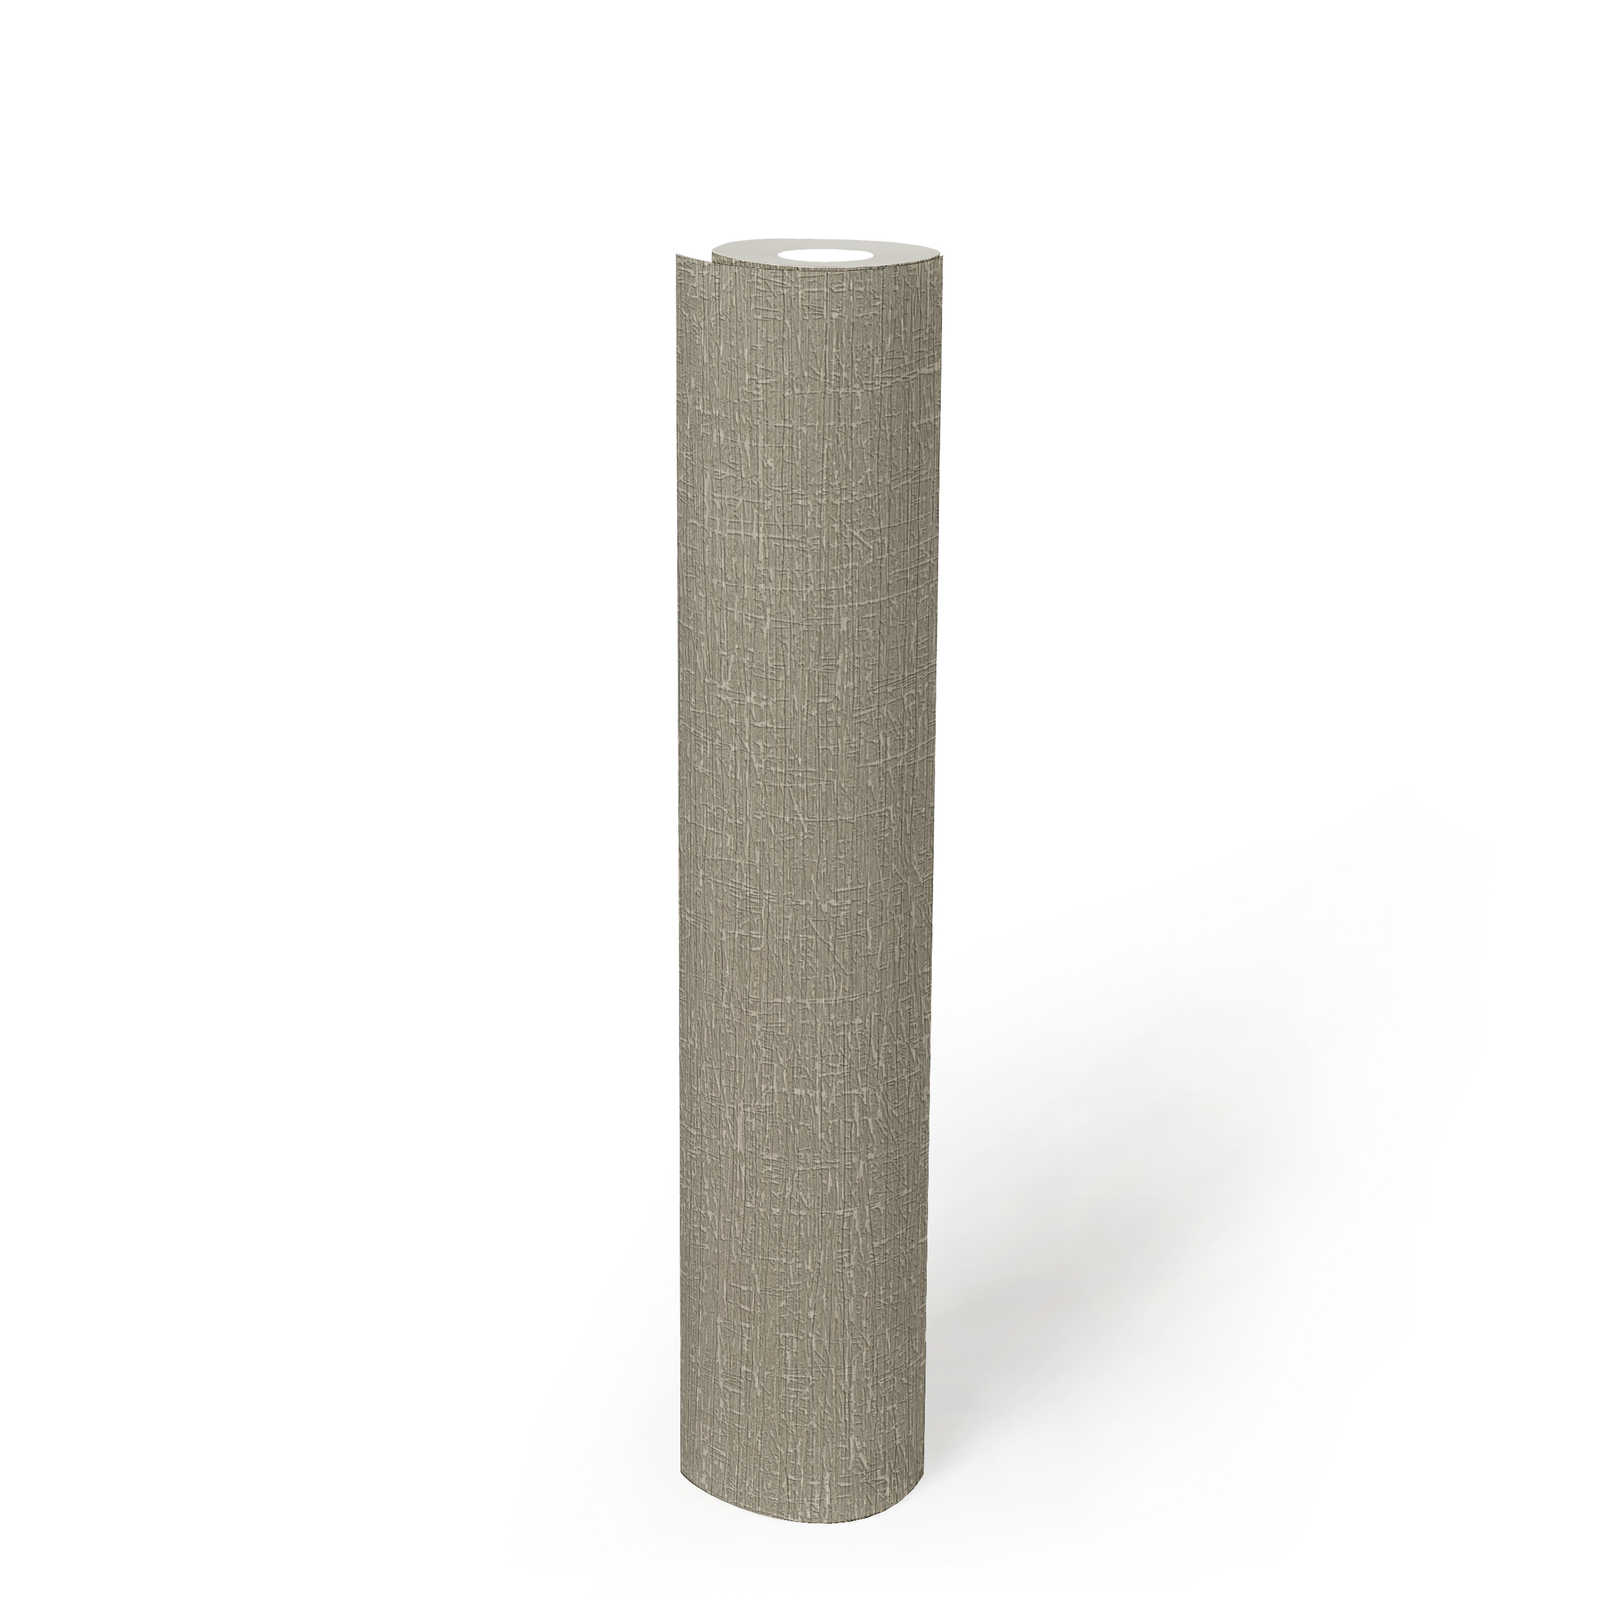             Textured plain wallpaper in matt look - grey, brown
        